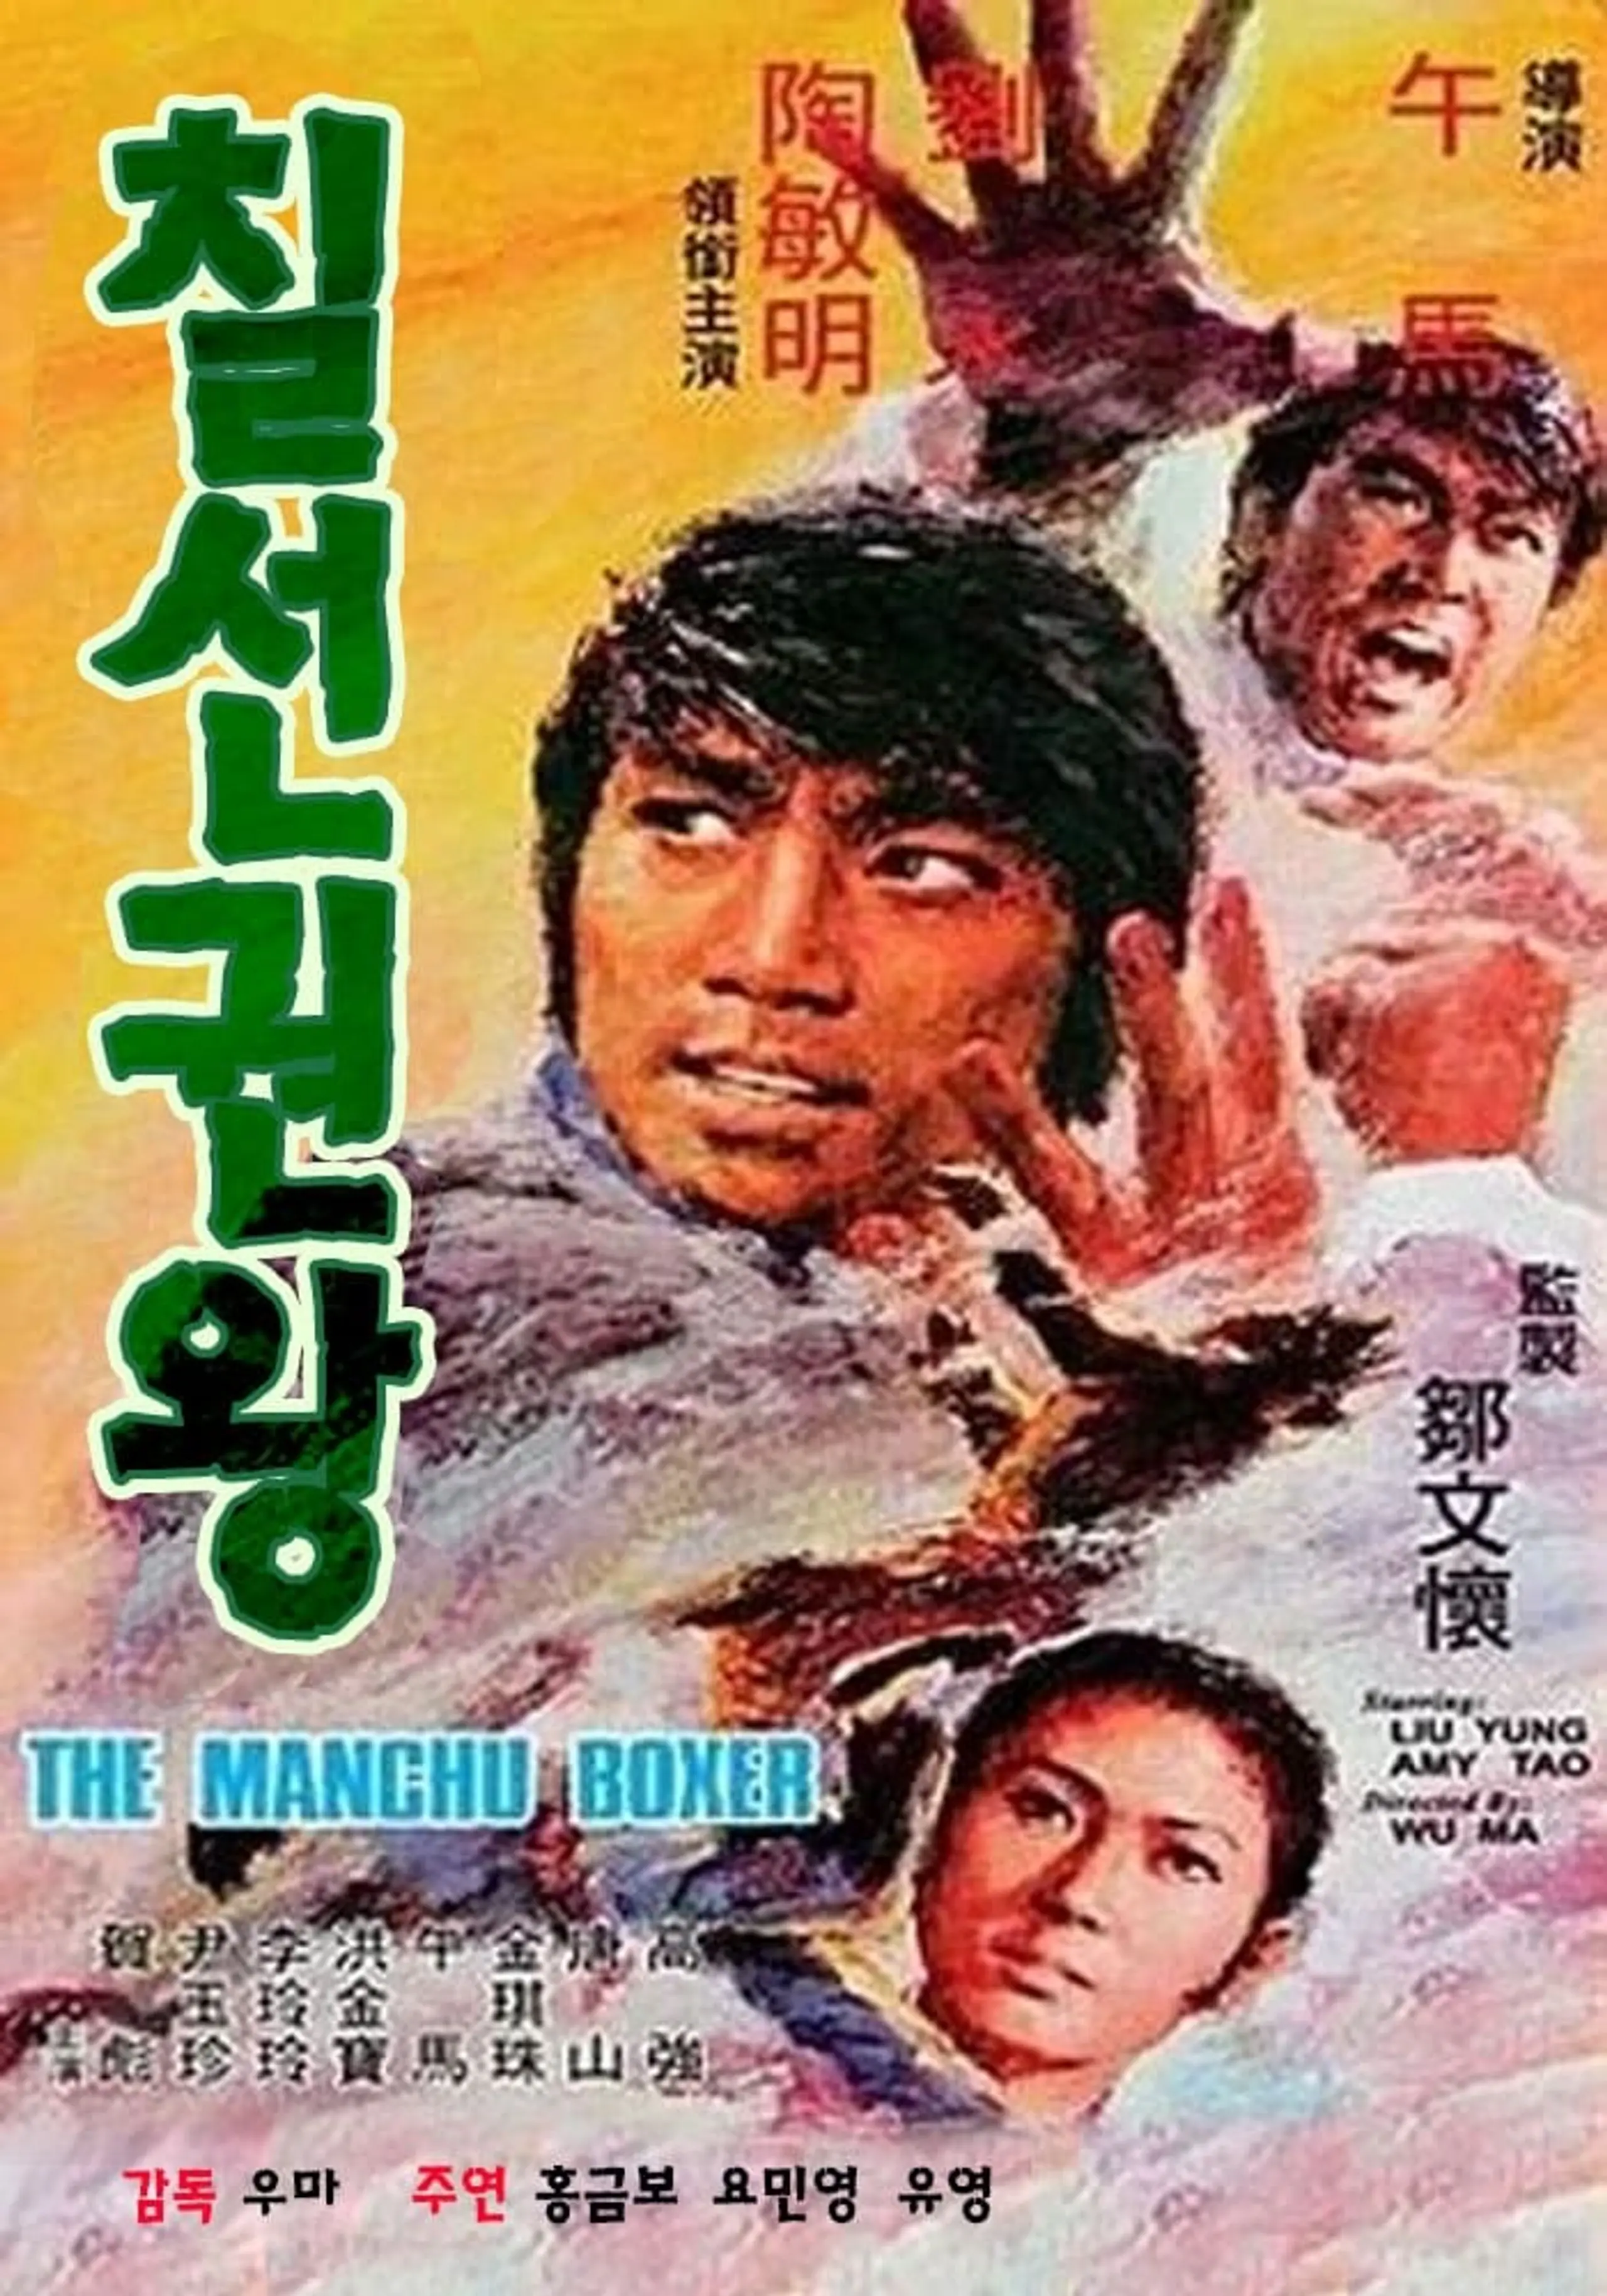 The Manchu Boxer